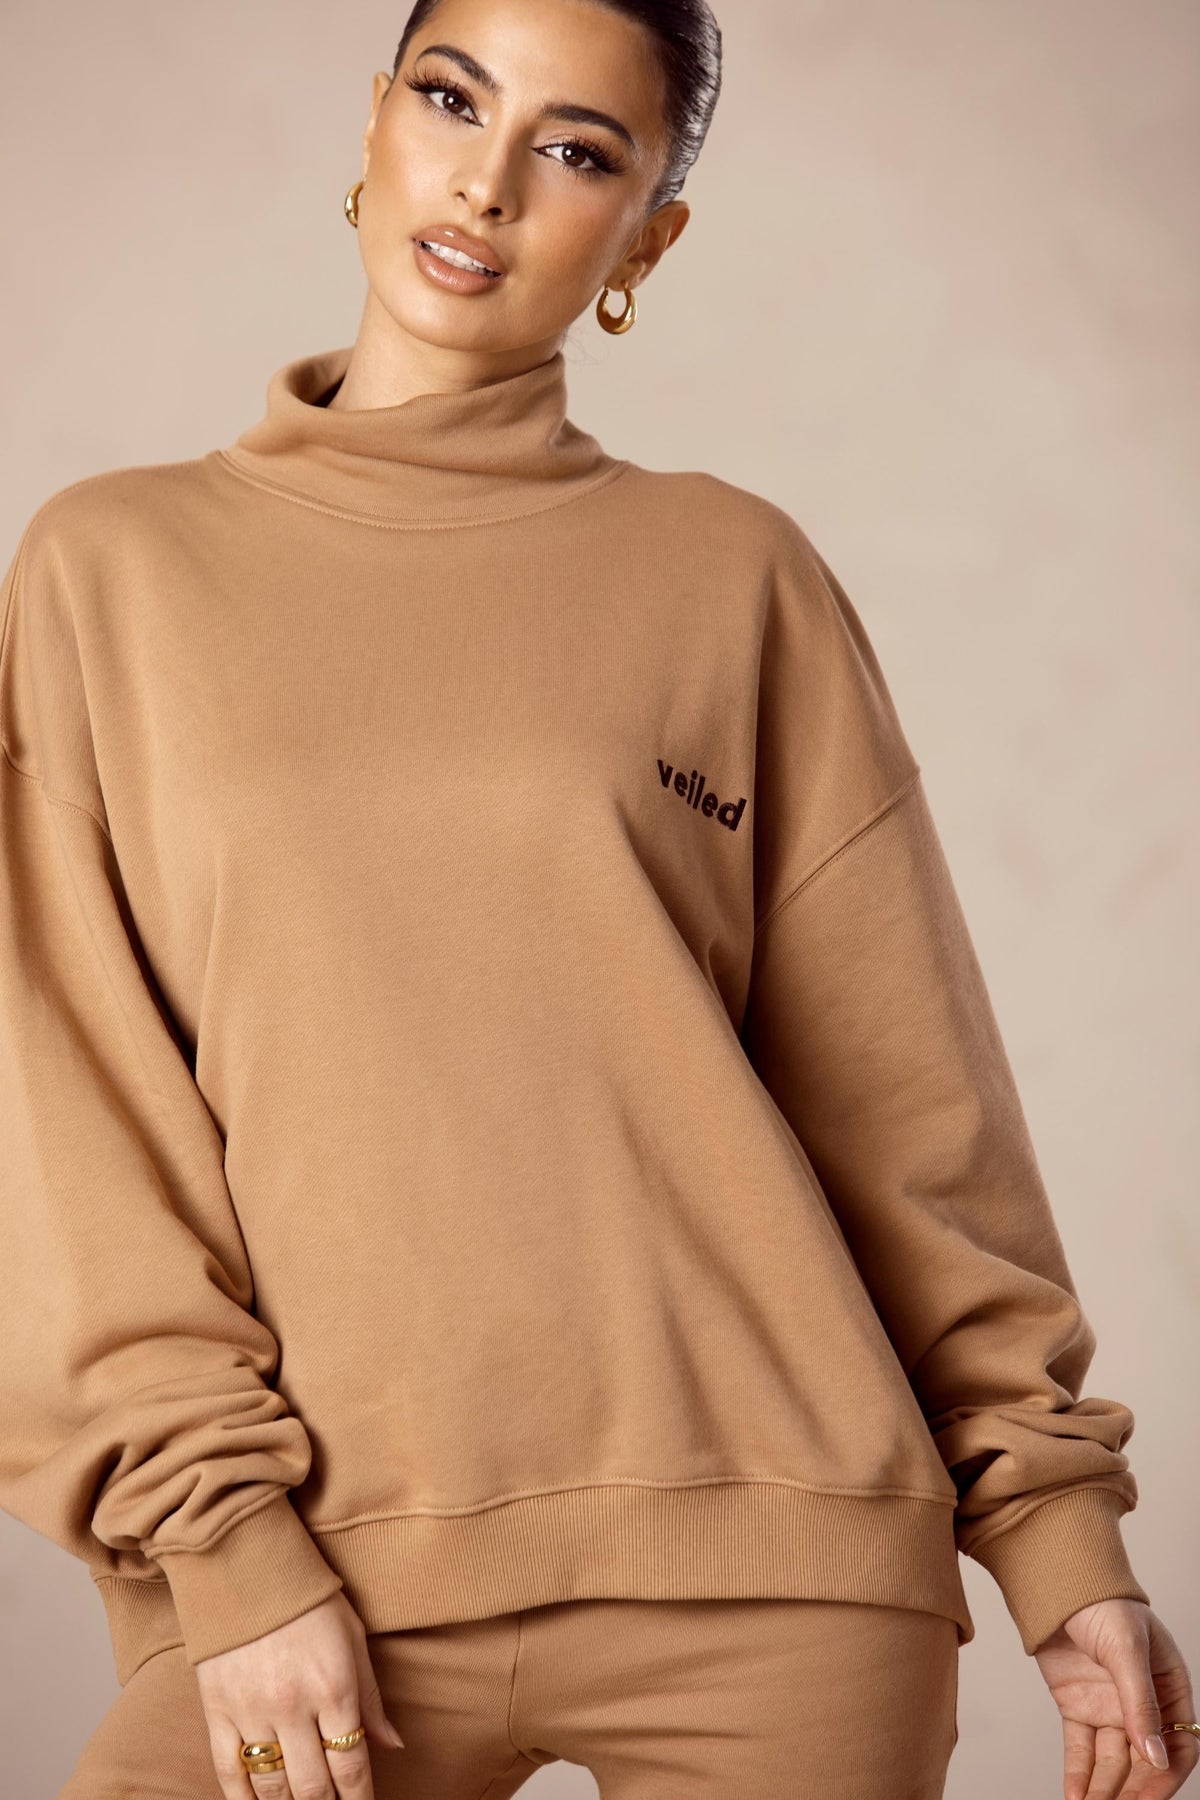 Pullover Mock Neck Sweatshirt - Camel Veiled Collection 